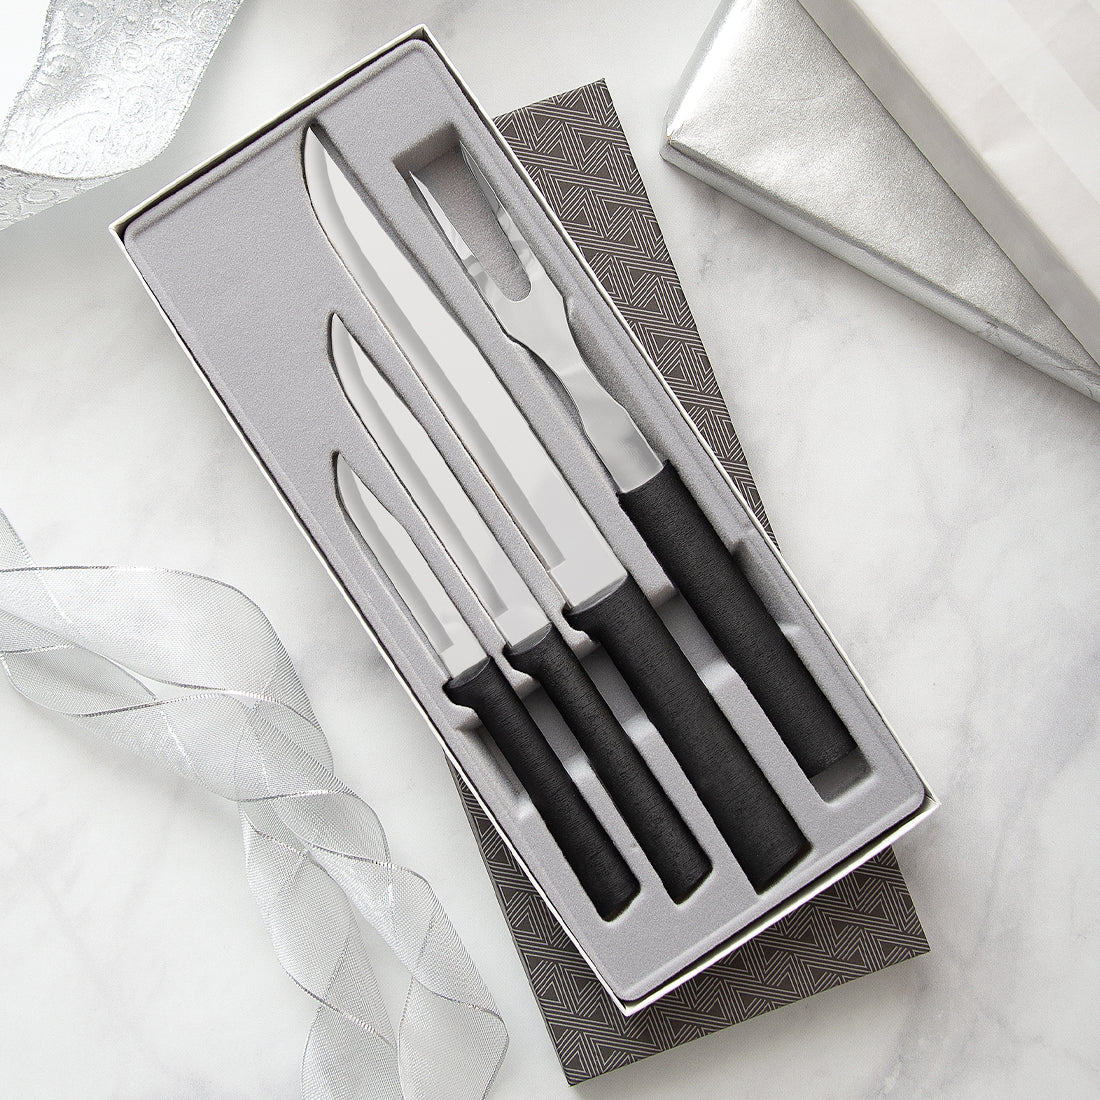 Rada Cutlery Carving Knife Set Stainless Steel 2-Piece Carving Set with Stainless Steel Black Resin Handles